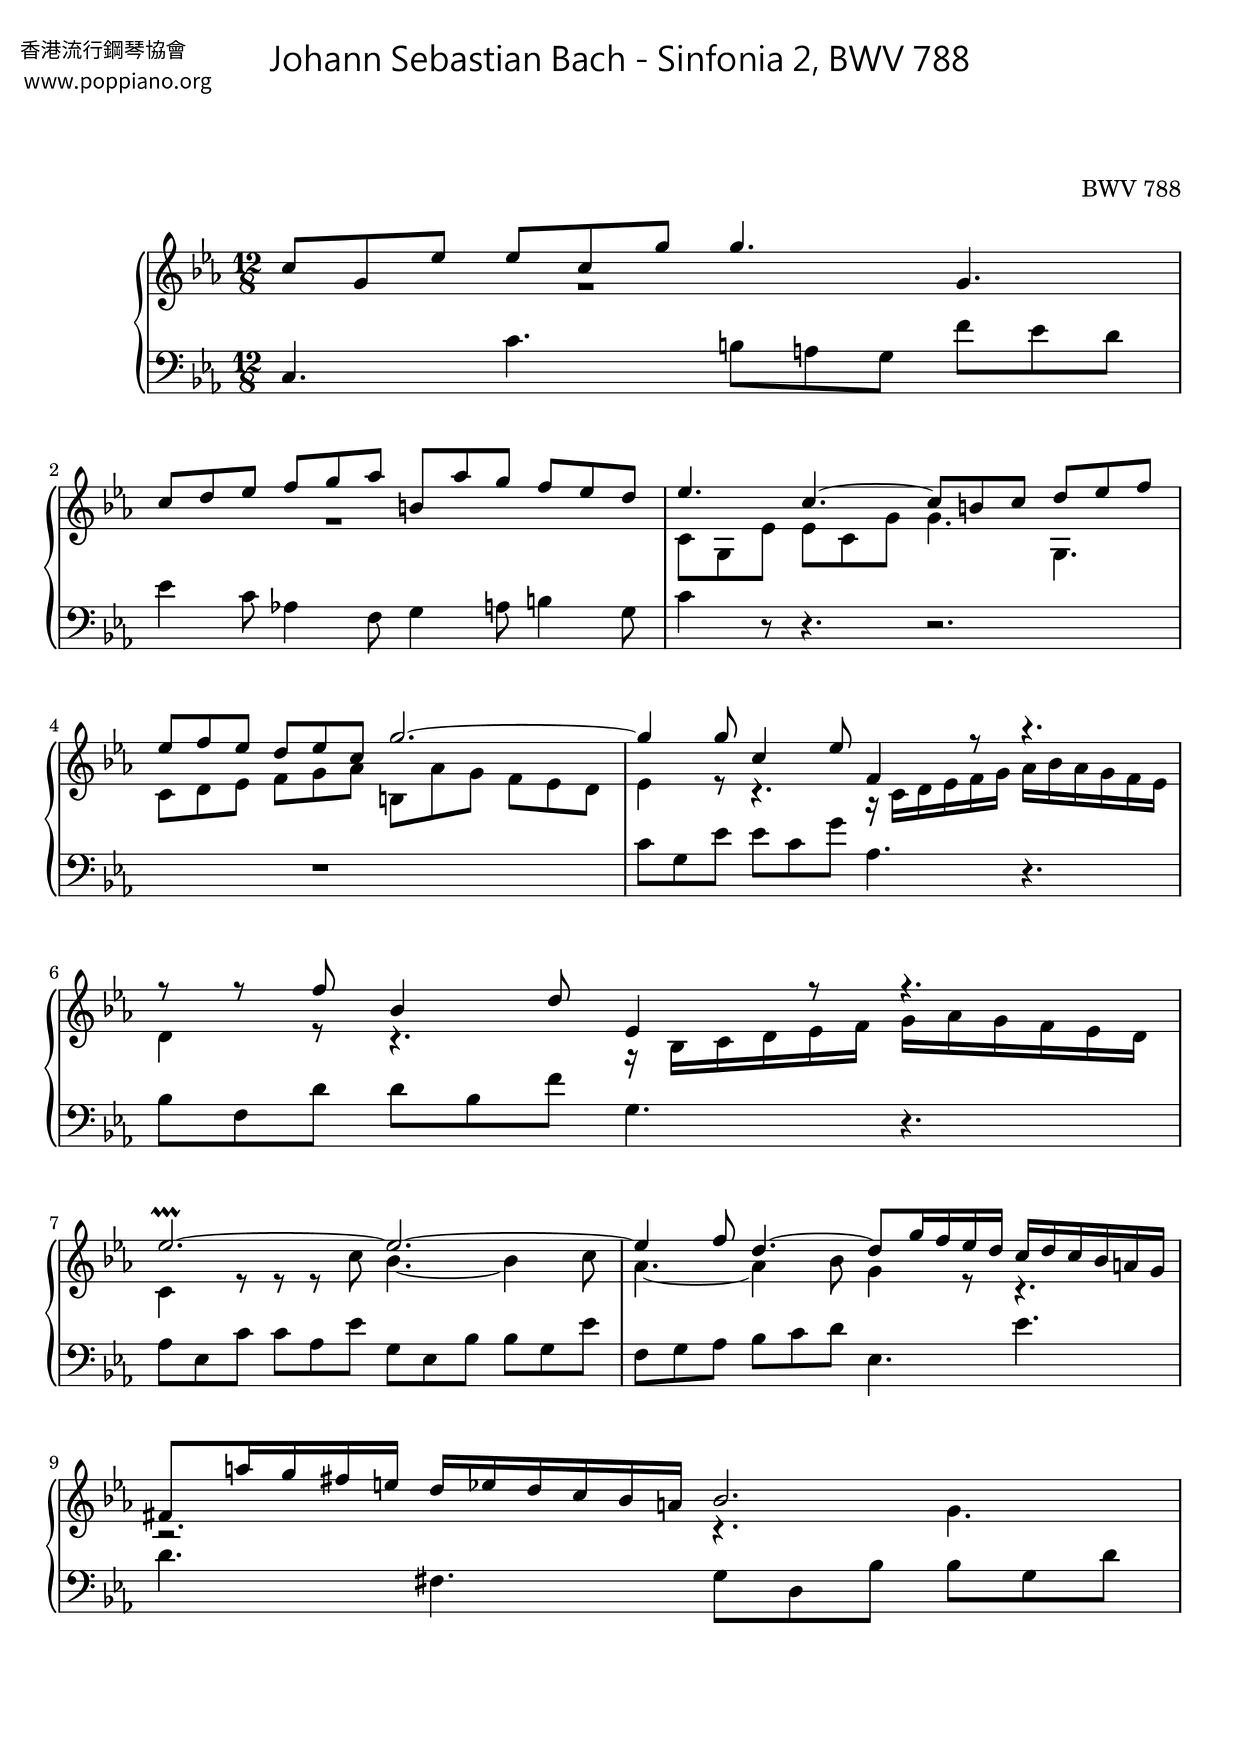 Sinfonia 2, BWV 788 Score